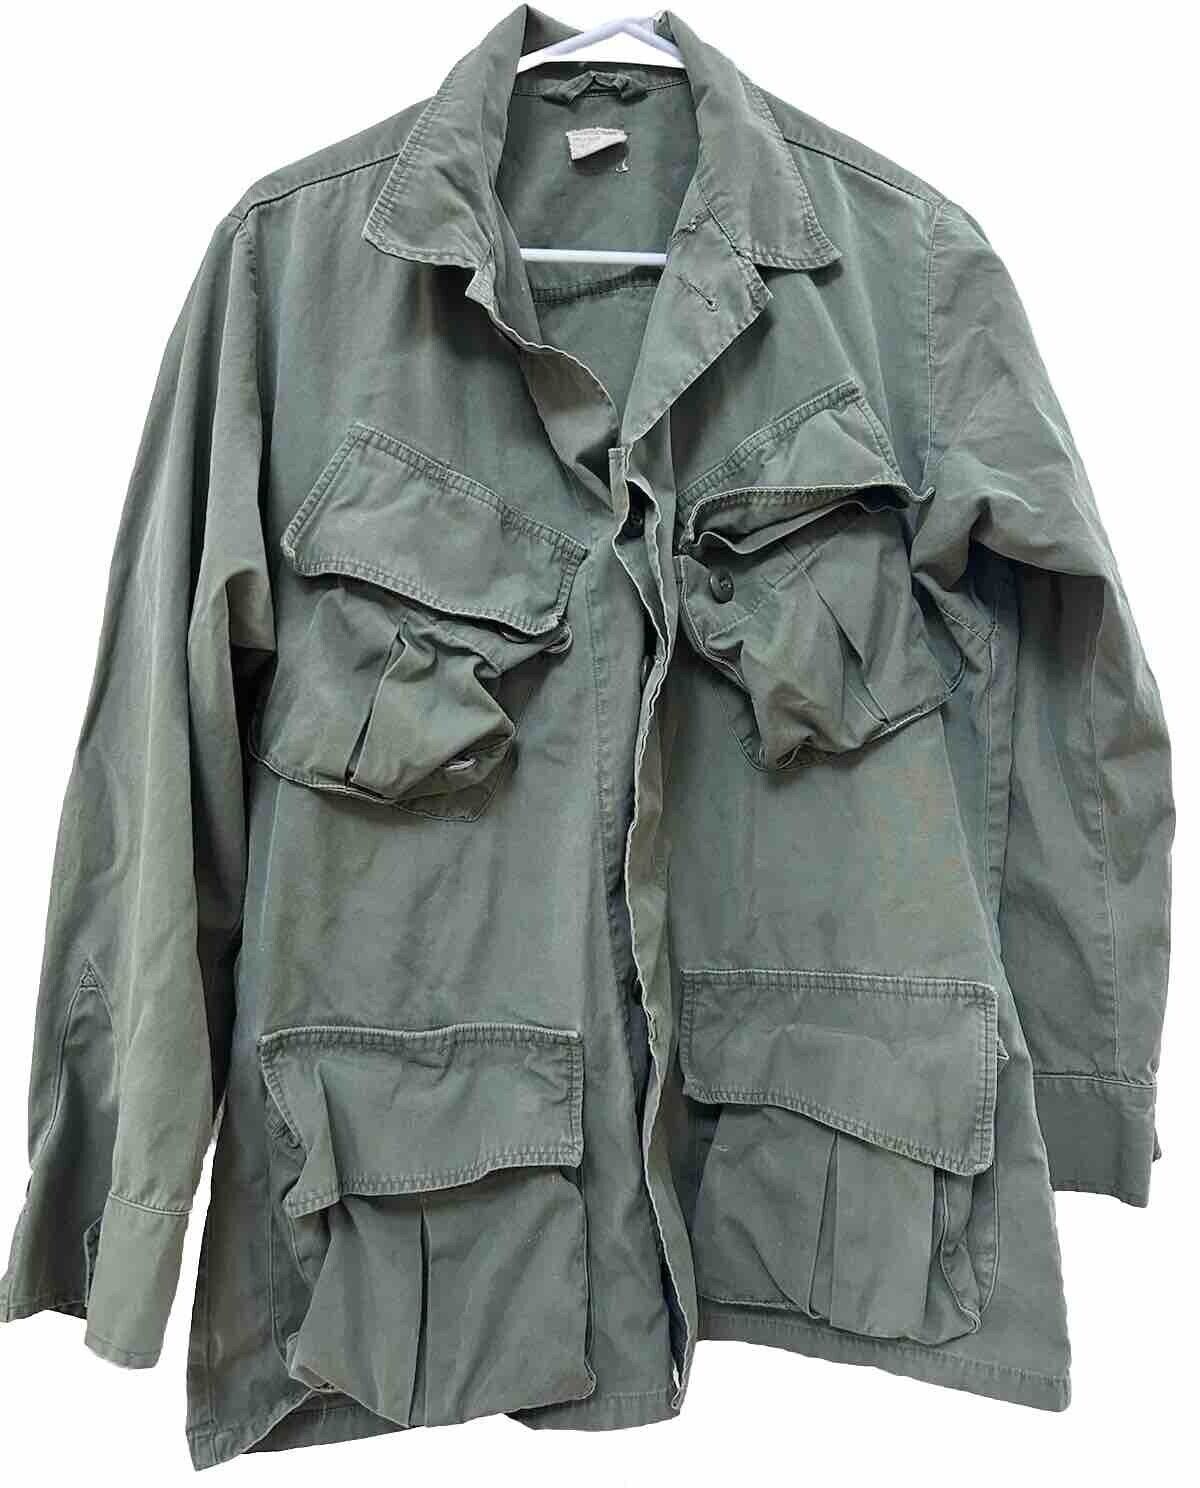 Vintage 1960s Vietnam Era Field Coat Jacket Small Short Good Condition